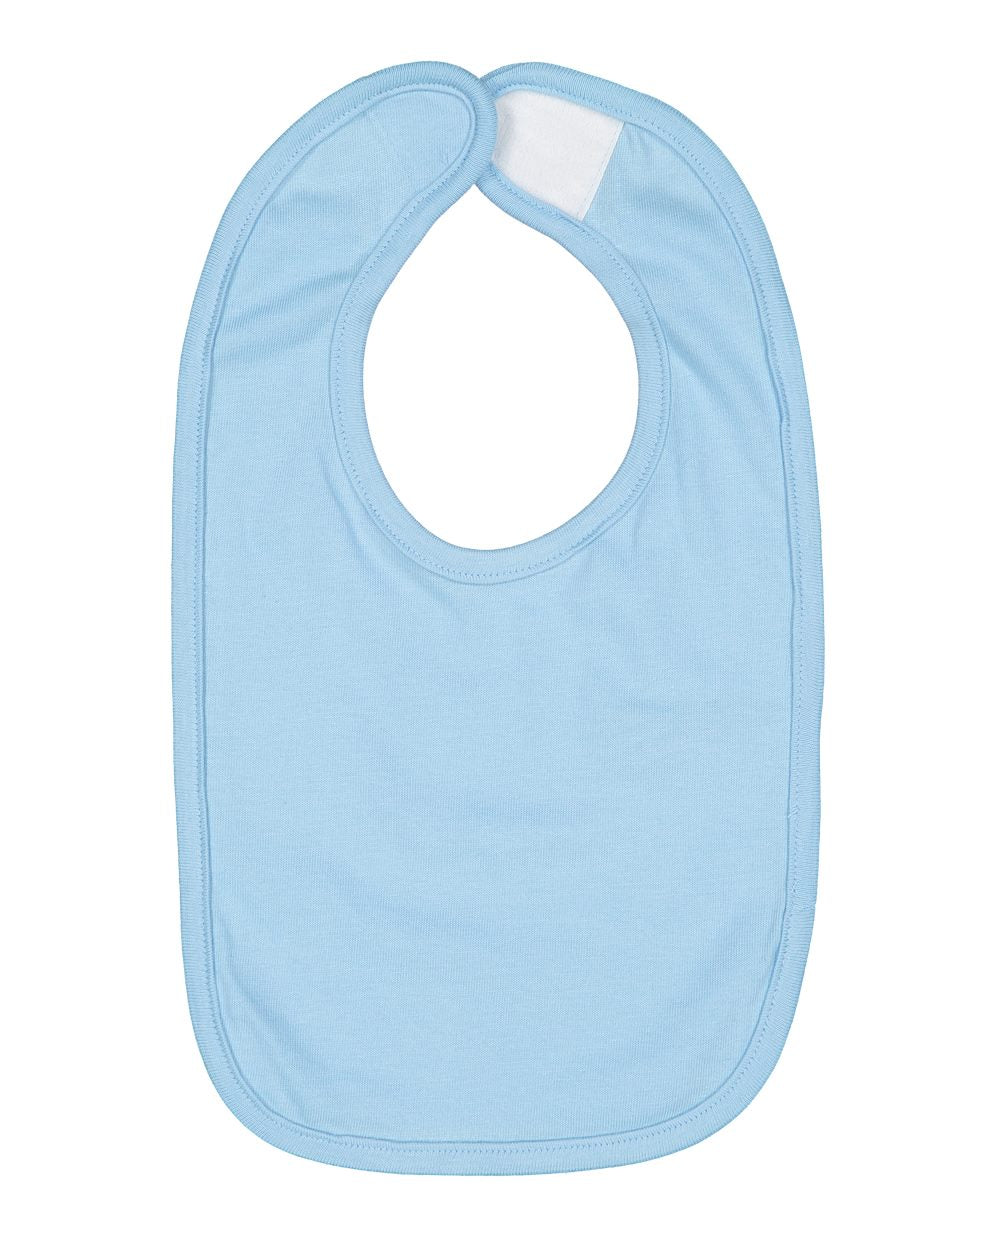 Rabbit Skins Infant Premium Jersey Bib 1005 #color_Light Blue